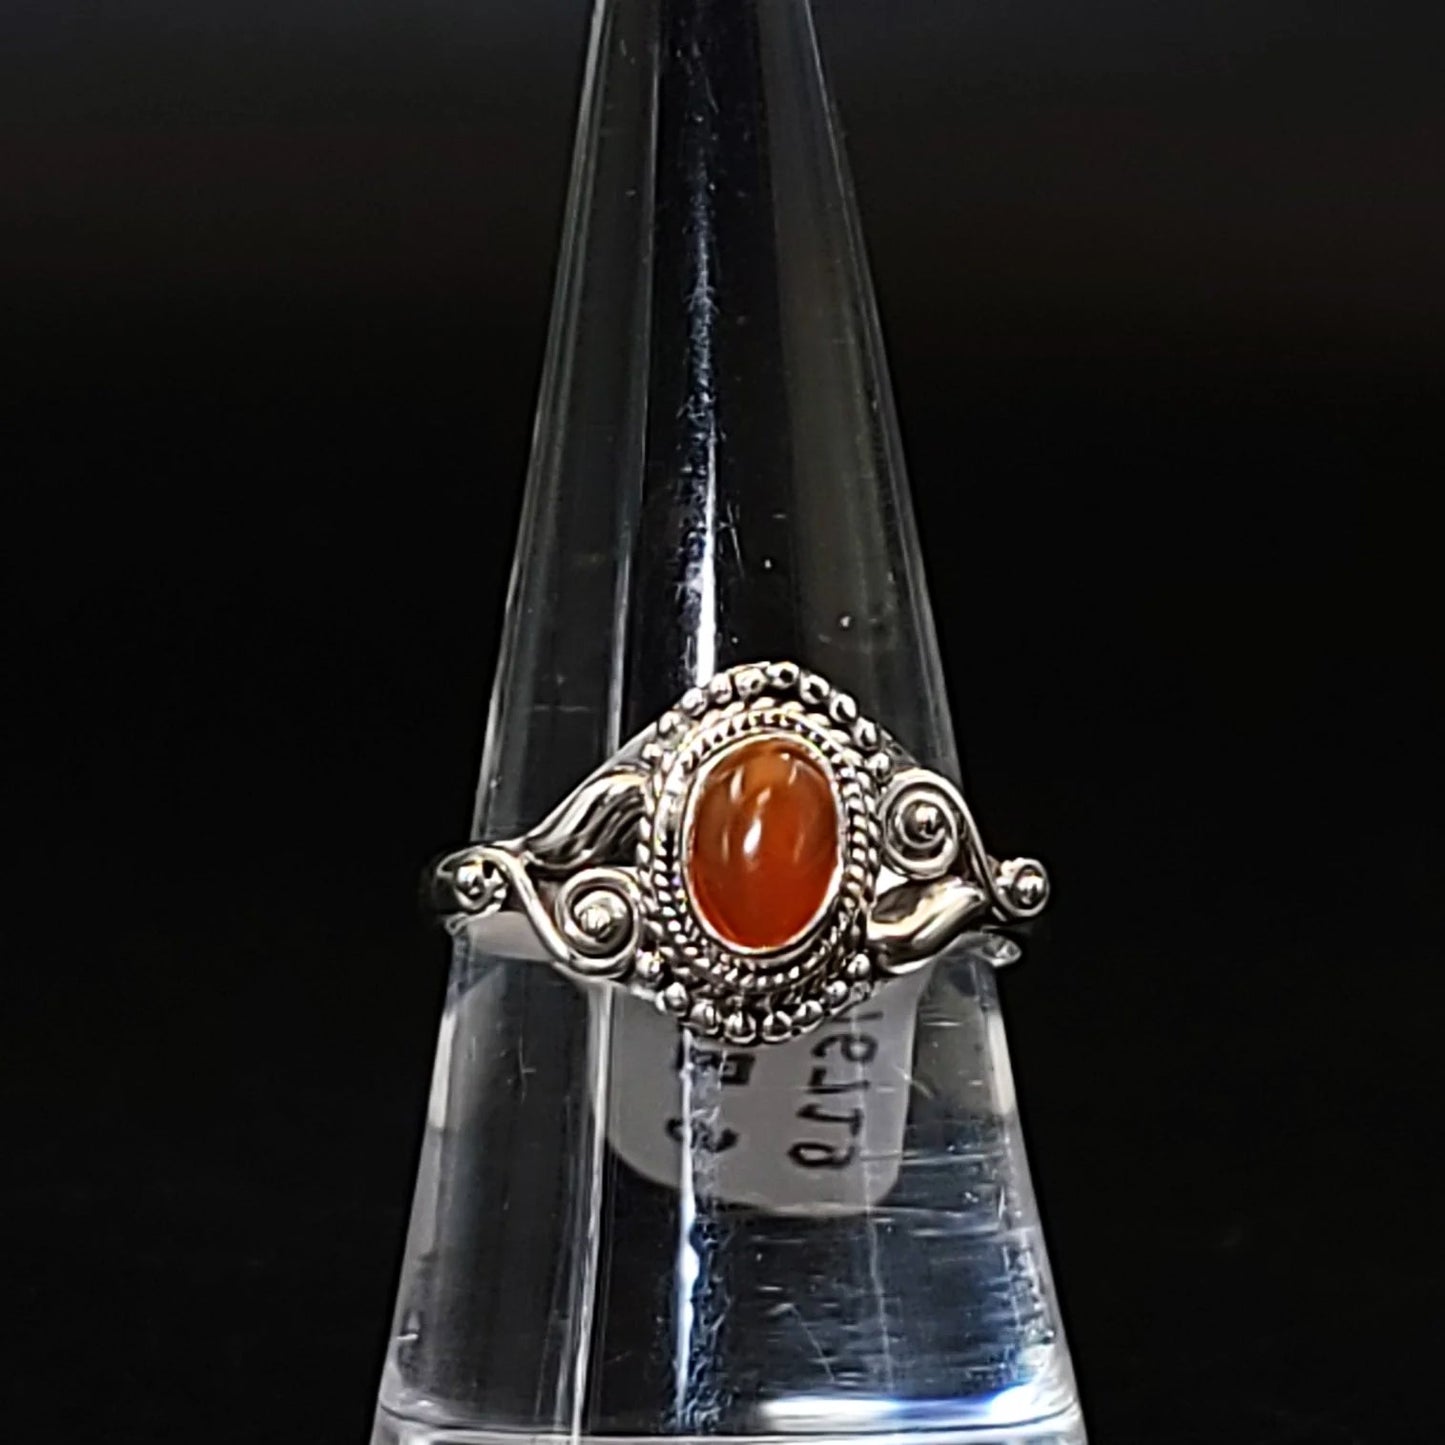 Carnelian Ring "Dahlia" Sterling Silver Size 9